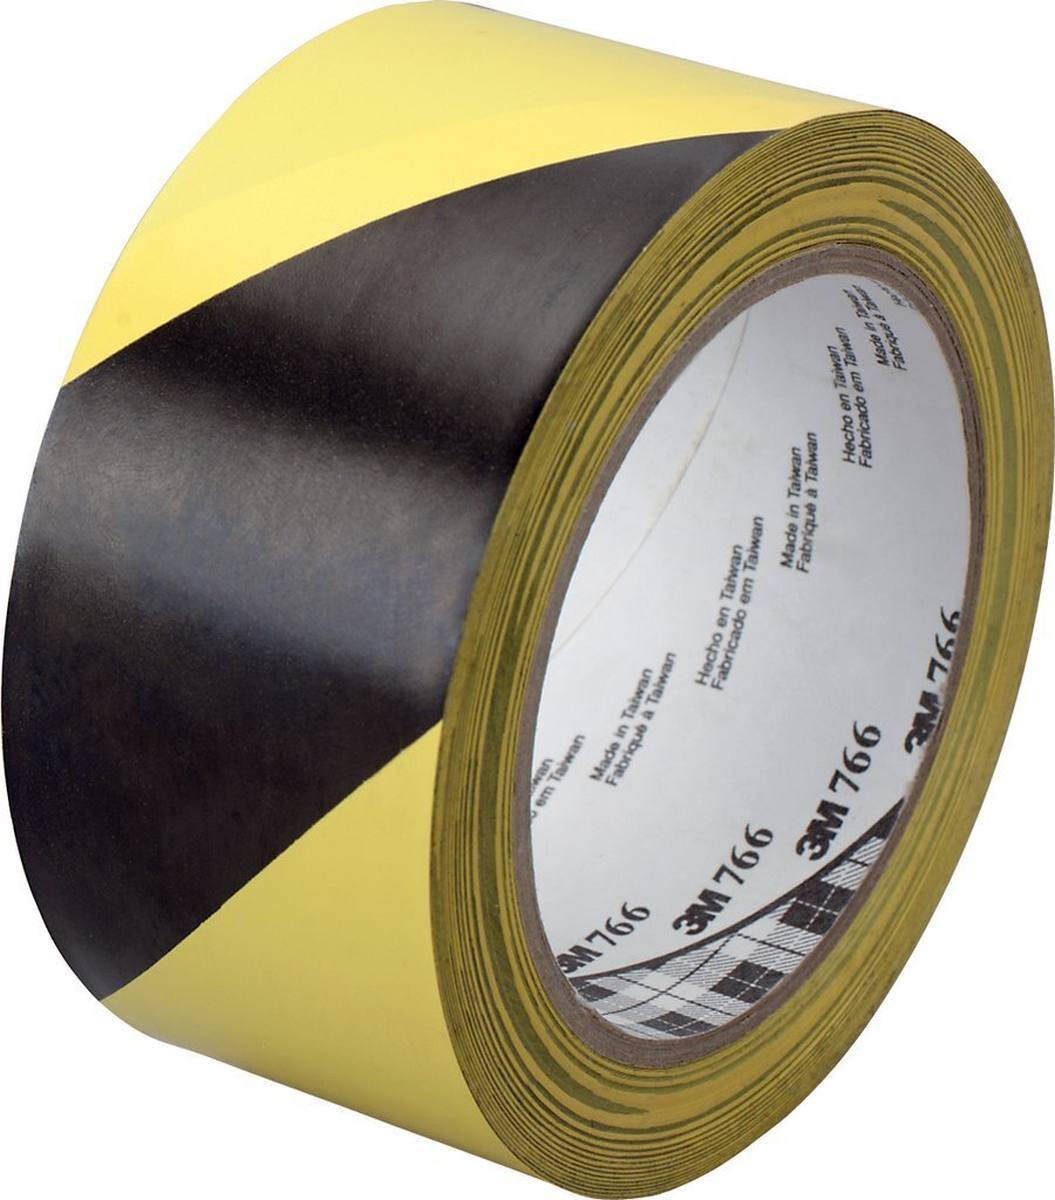 3M Scotch All Purpose Soft PVC Tape 766i 50mmx33m black/yellow